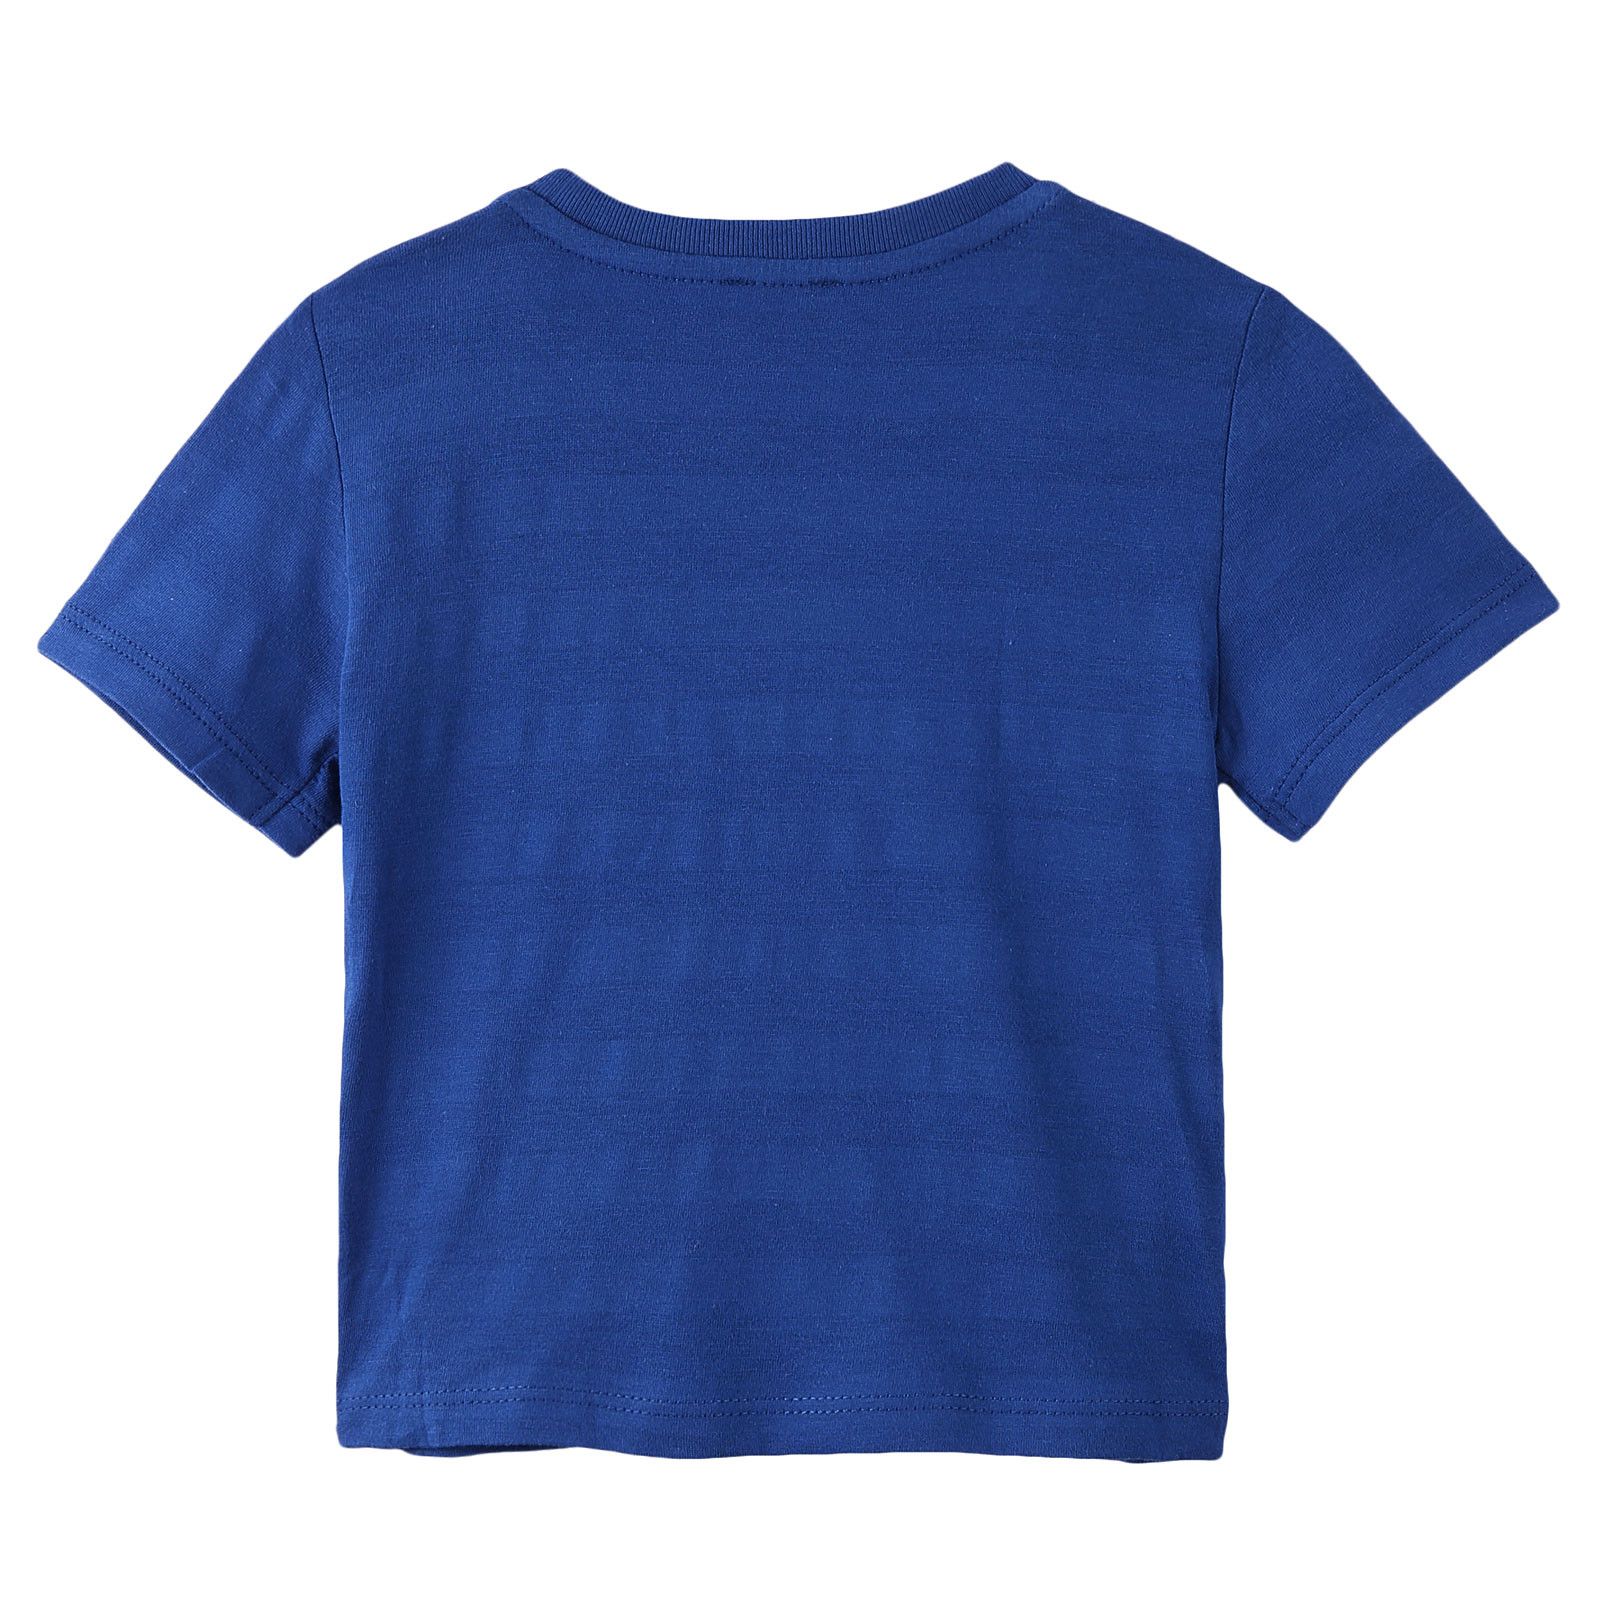 Boys Royal Blue Shark Printed Cotton T-Shirt - CÉMAROSE | Children's Fashion Store - 2